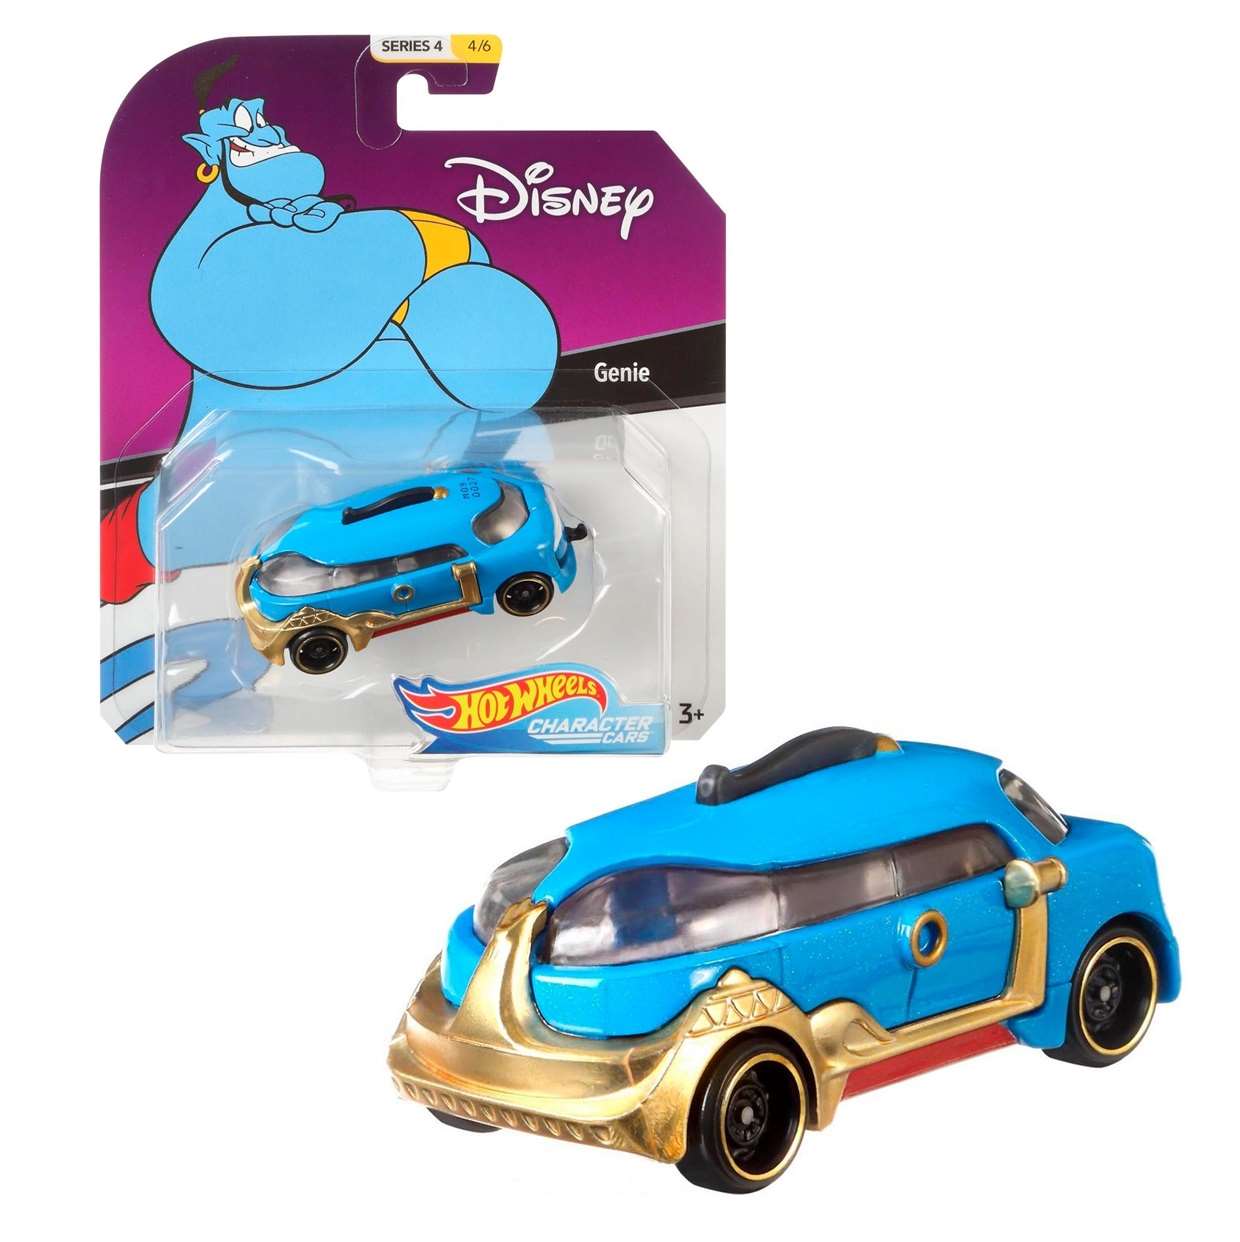 Genie 4/6 Hot Wheels Disney The Aladdin Character Cars